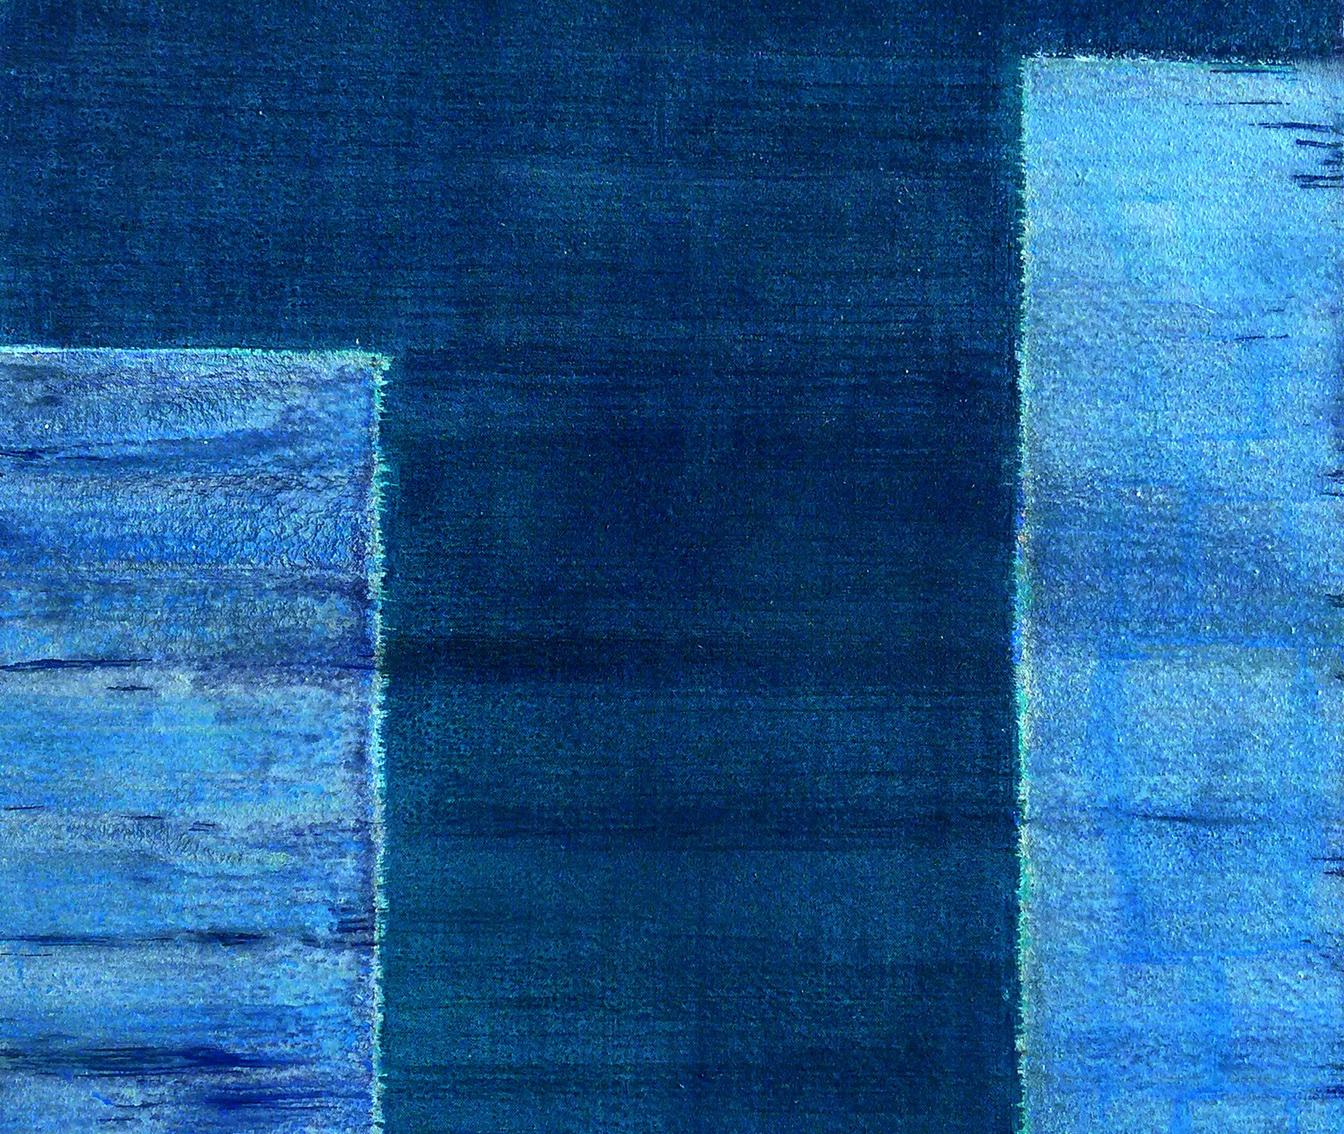 Deep Blue Water - Abstract Geometric Painting by Suejin Jo